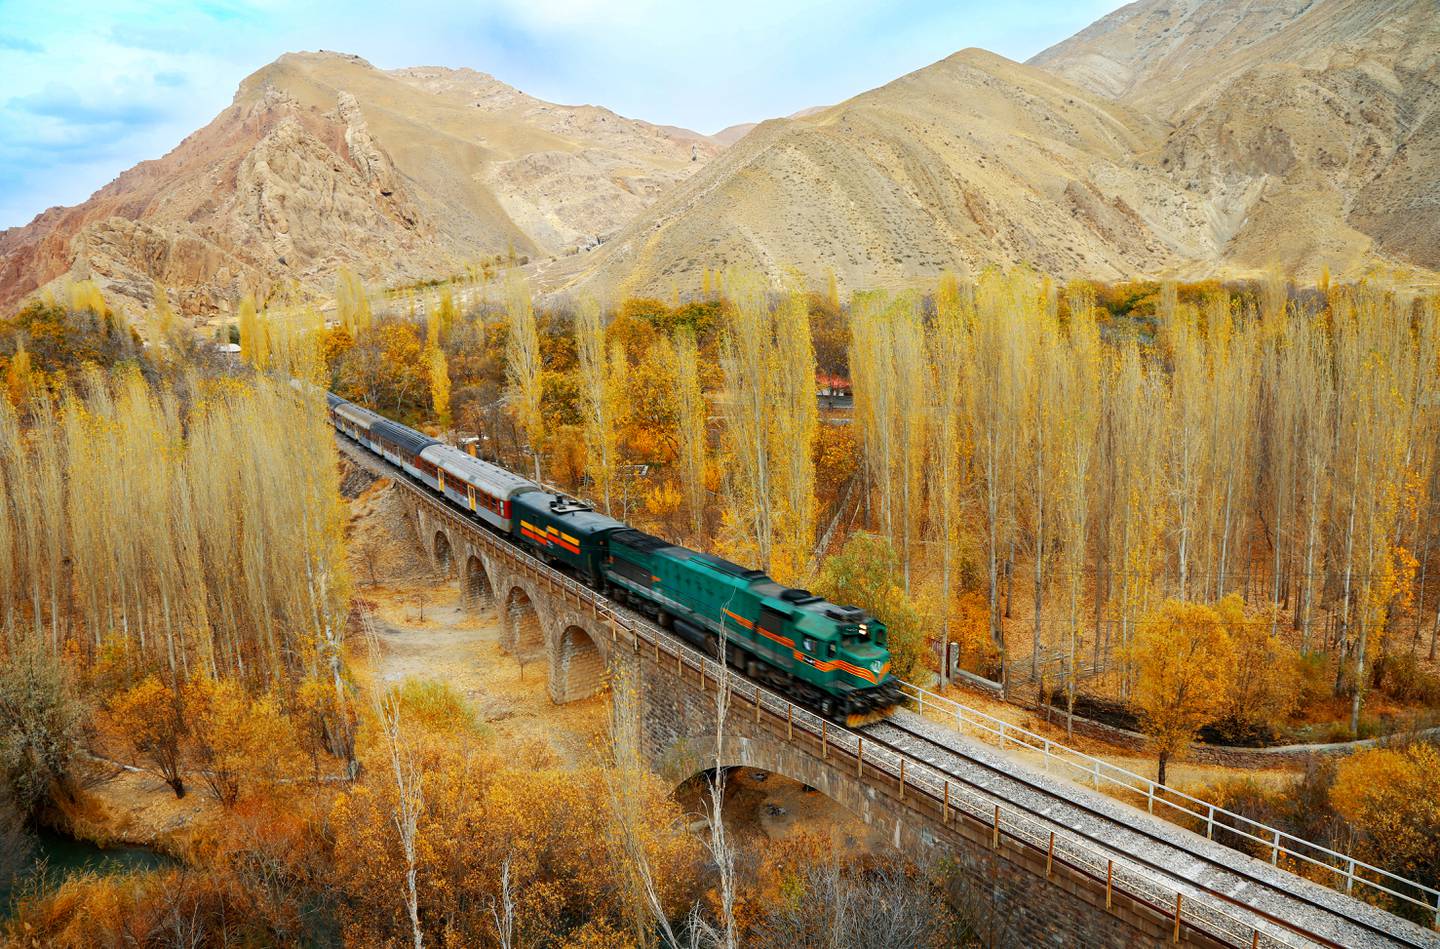 North line, Zarrindasht-Mahabad route. Hossein Javadi